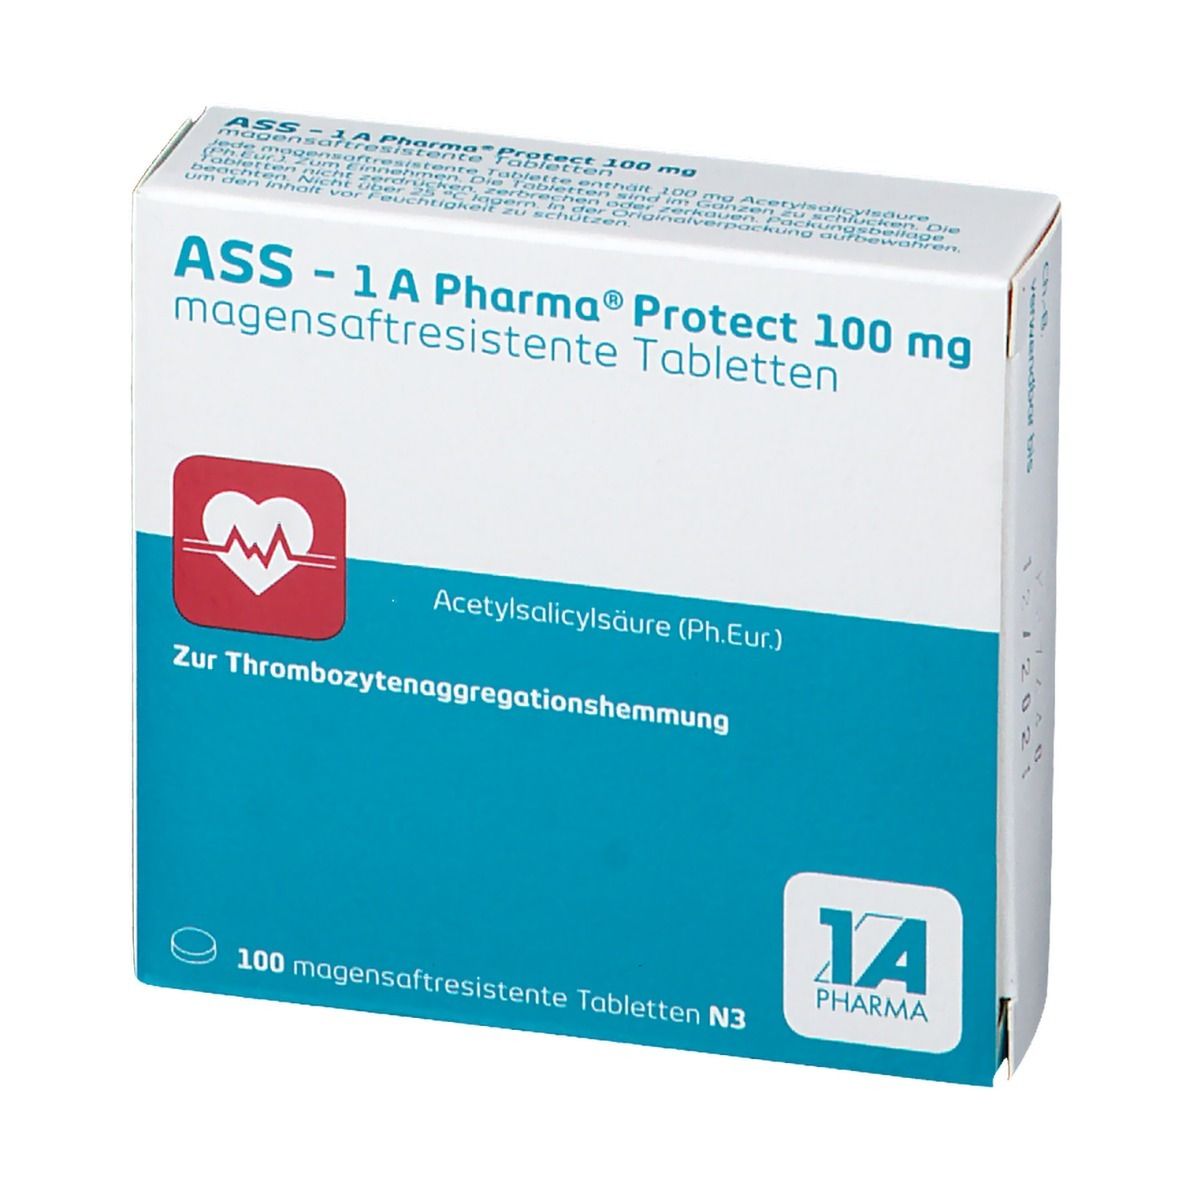 ASS-1A Pharma® Protect 100 mg